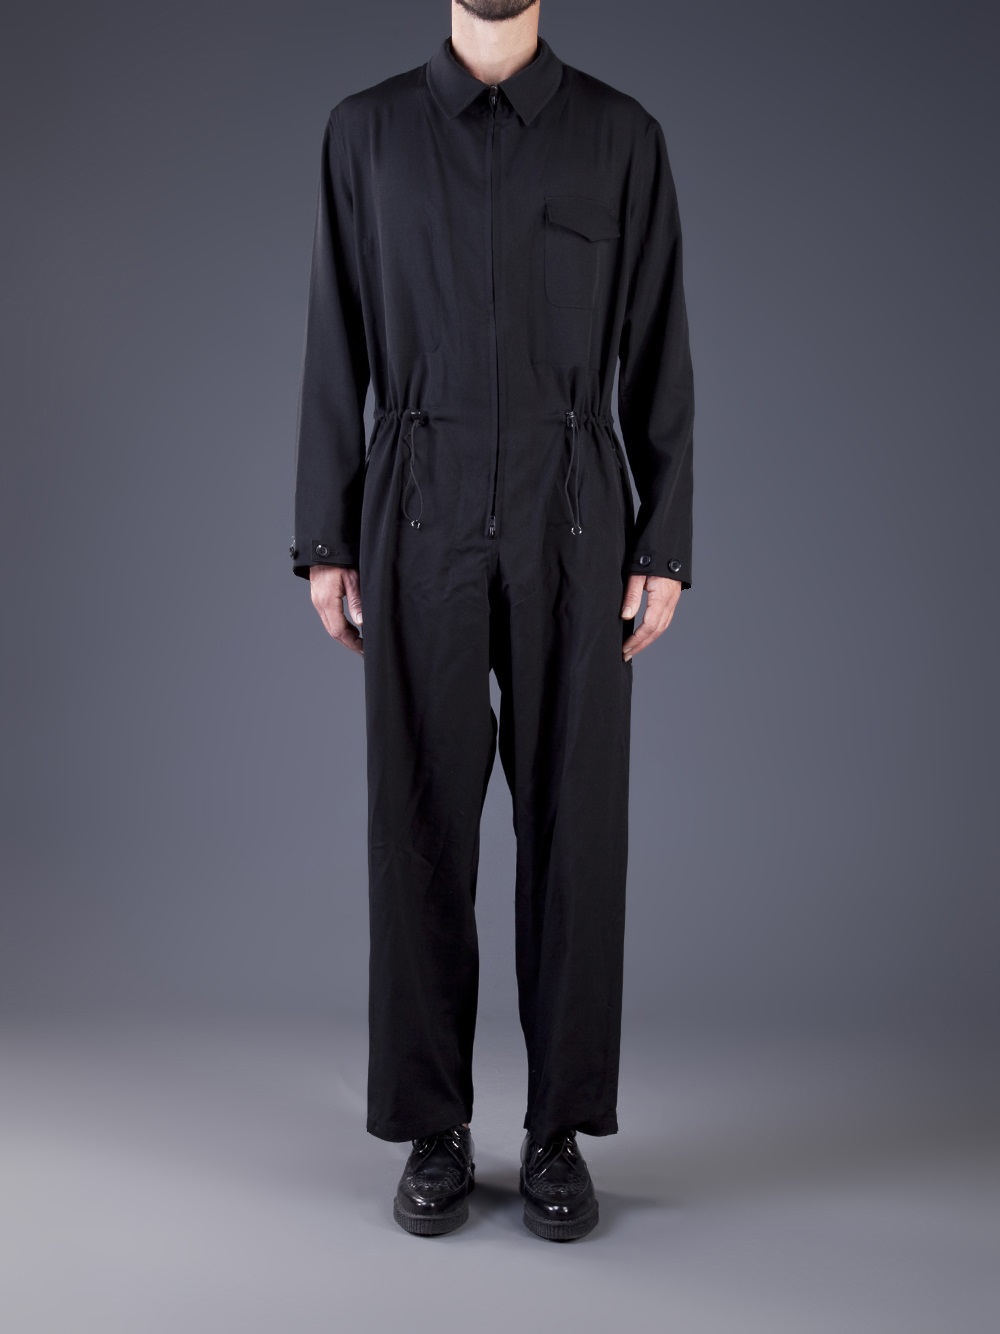 Yohji Yamamoto Drawstring Waist Jumpsuit in Black for Men - Lyst